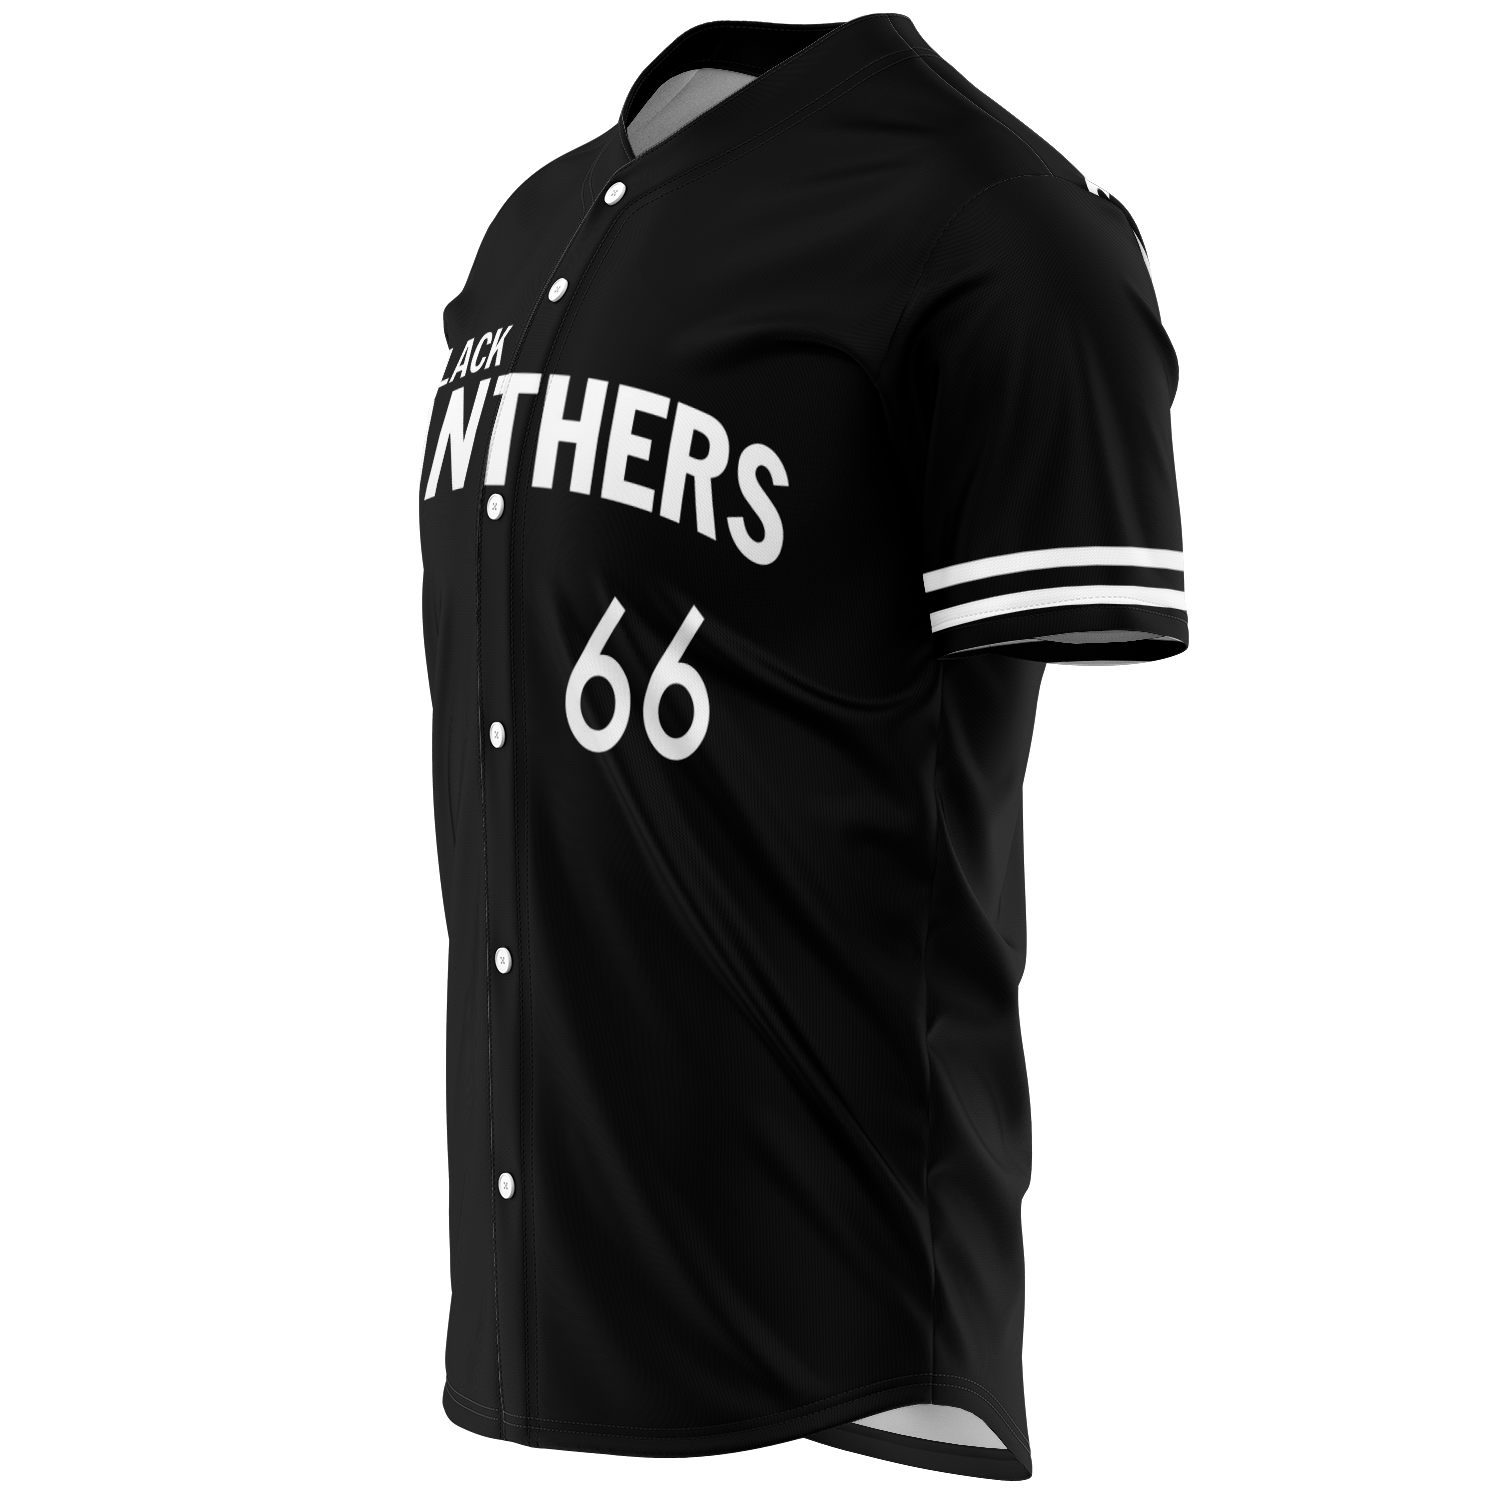 Assata Shakur - Black Panther Party Houston Astros - Baseball